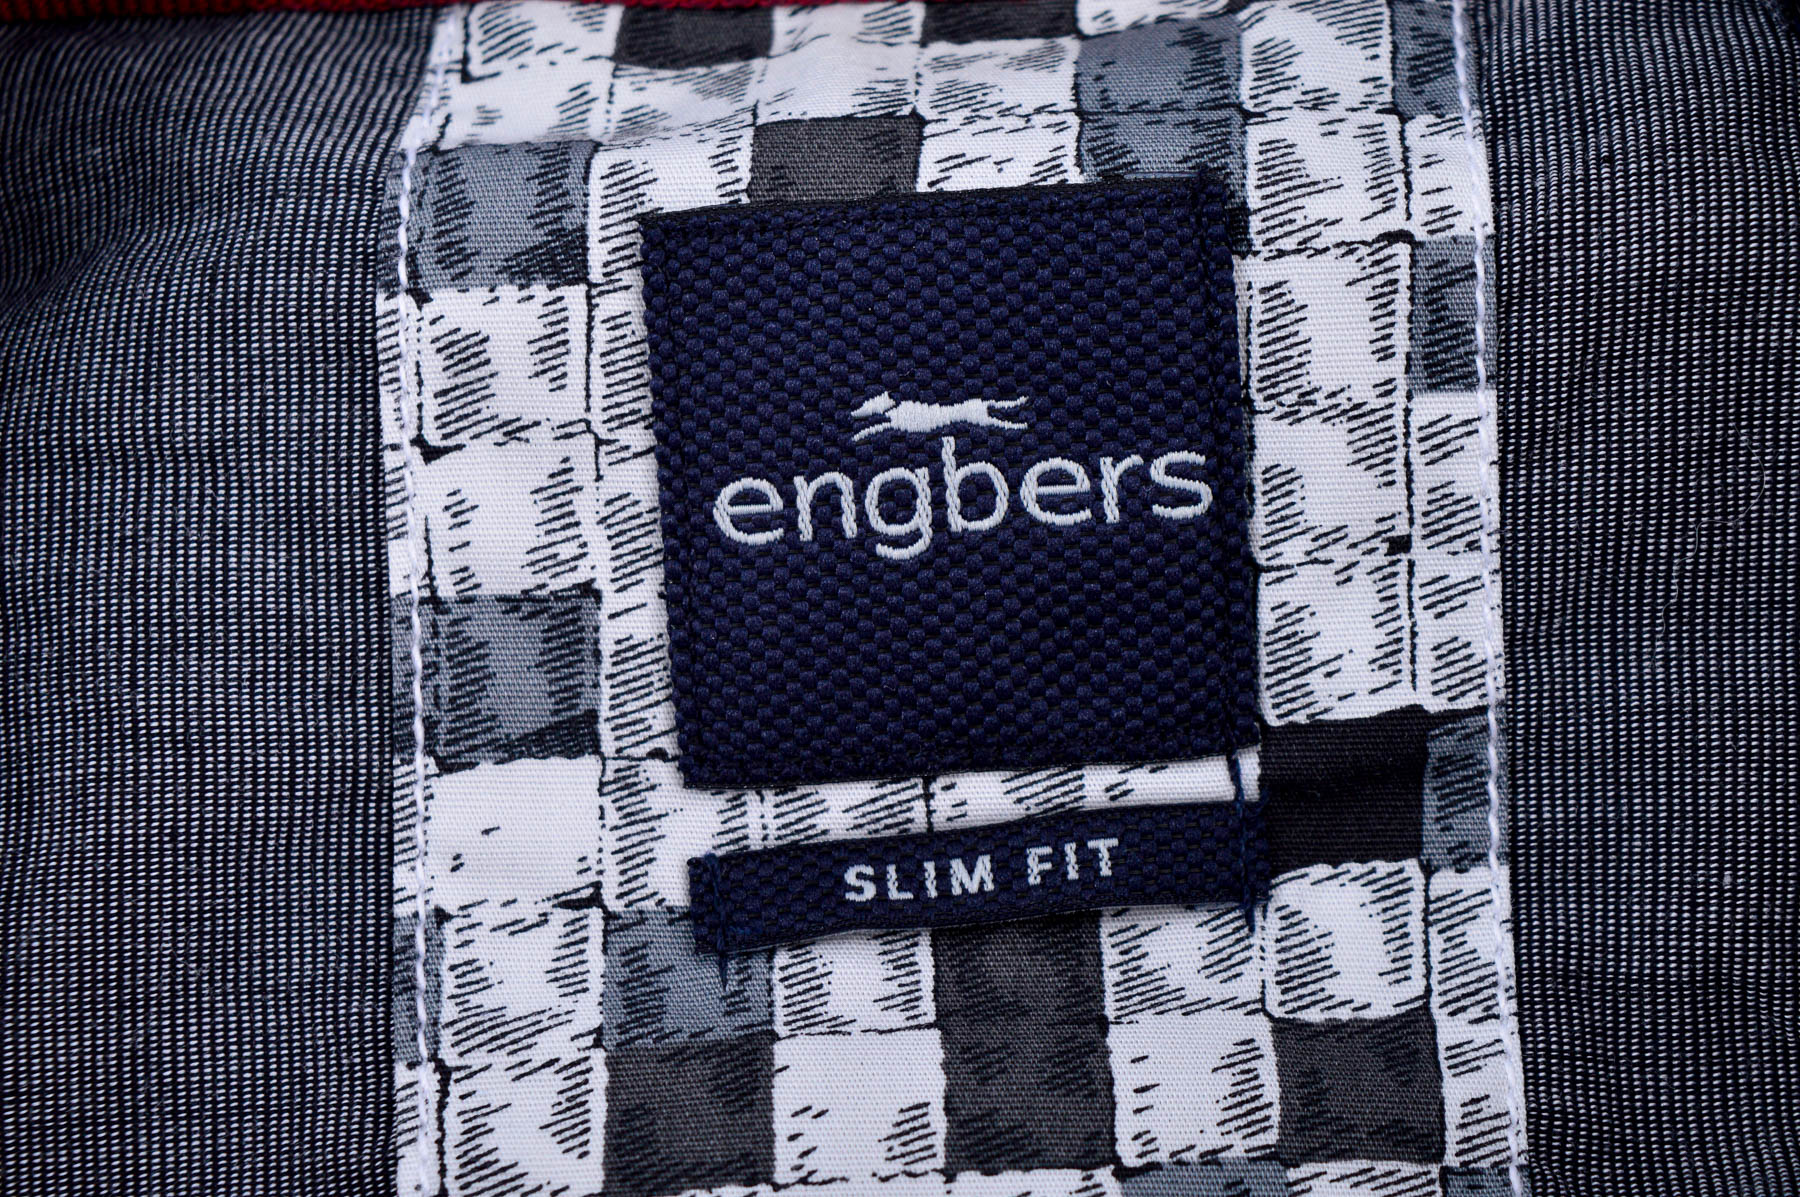 Men's shirt - Engbers - 2